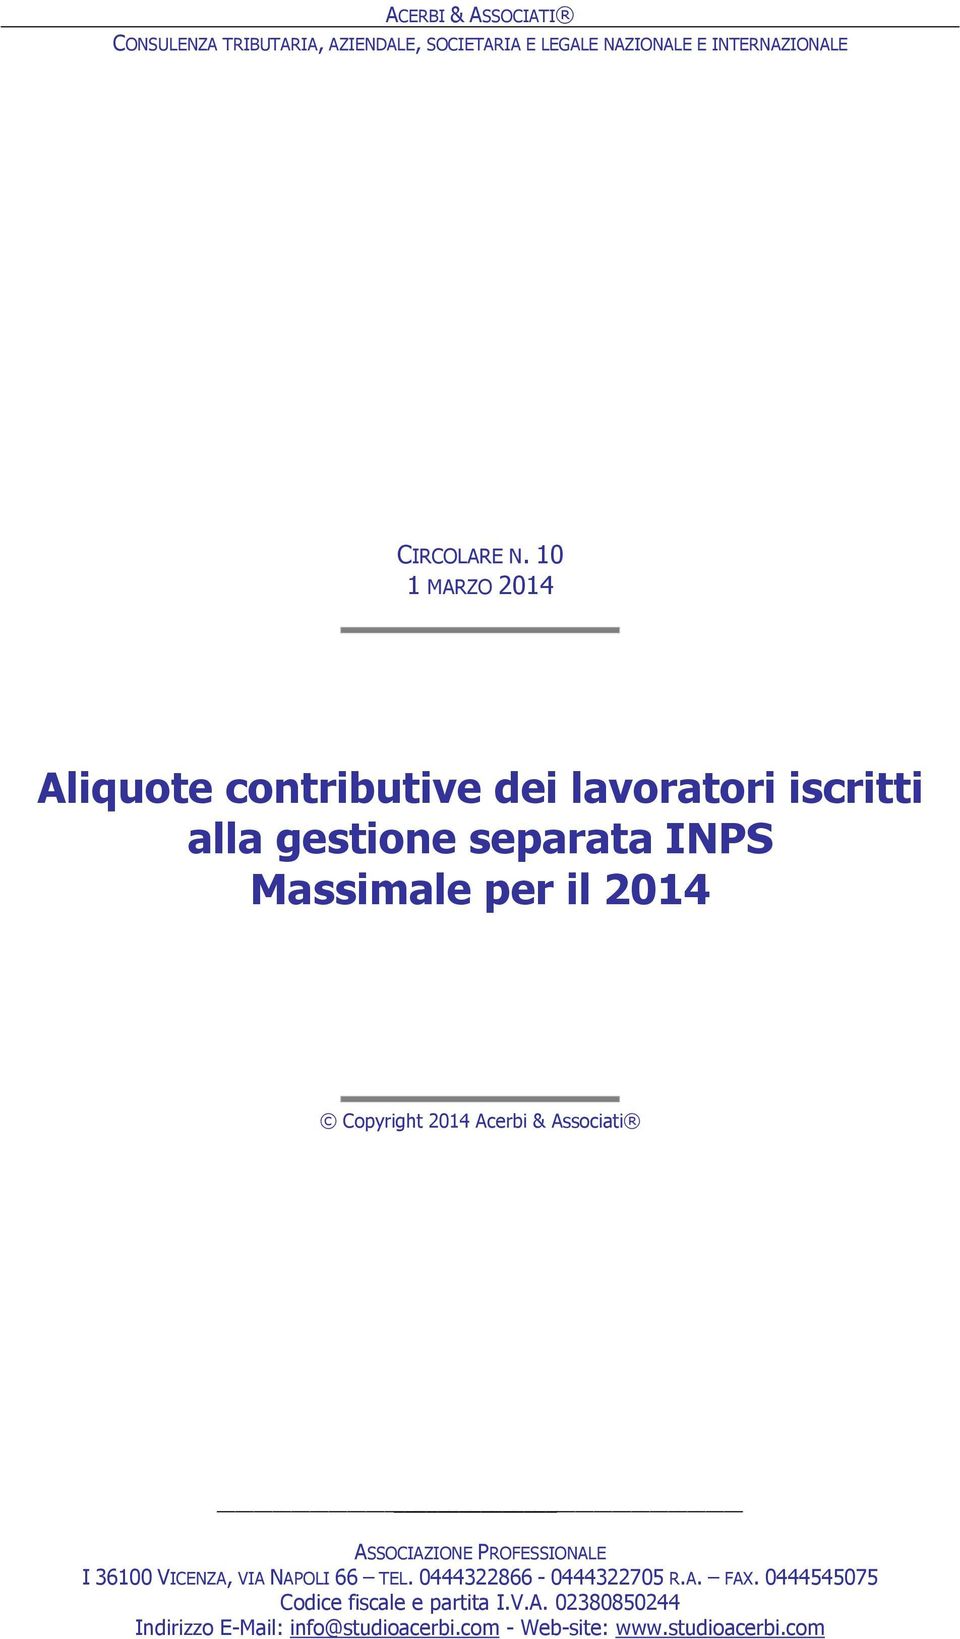 Copyright 2014 Acerbi & Associati ASSOCIAZIONE PROFESSIONALE I 36100 VICENZA, VIA NAPOLI 66 TEL. 0444322866-0444322705 R.